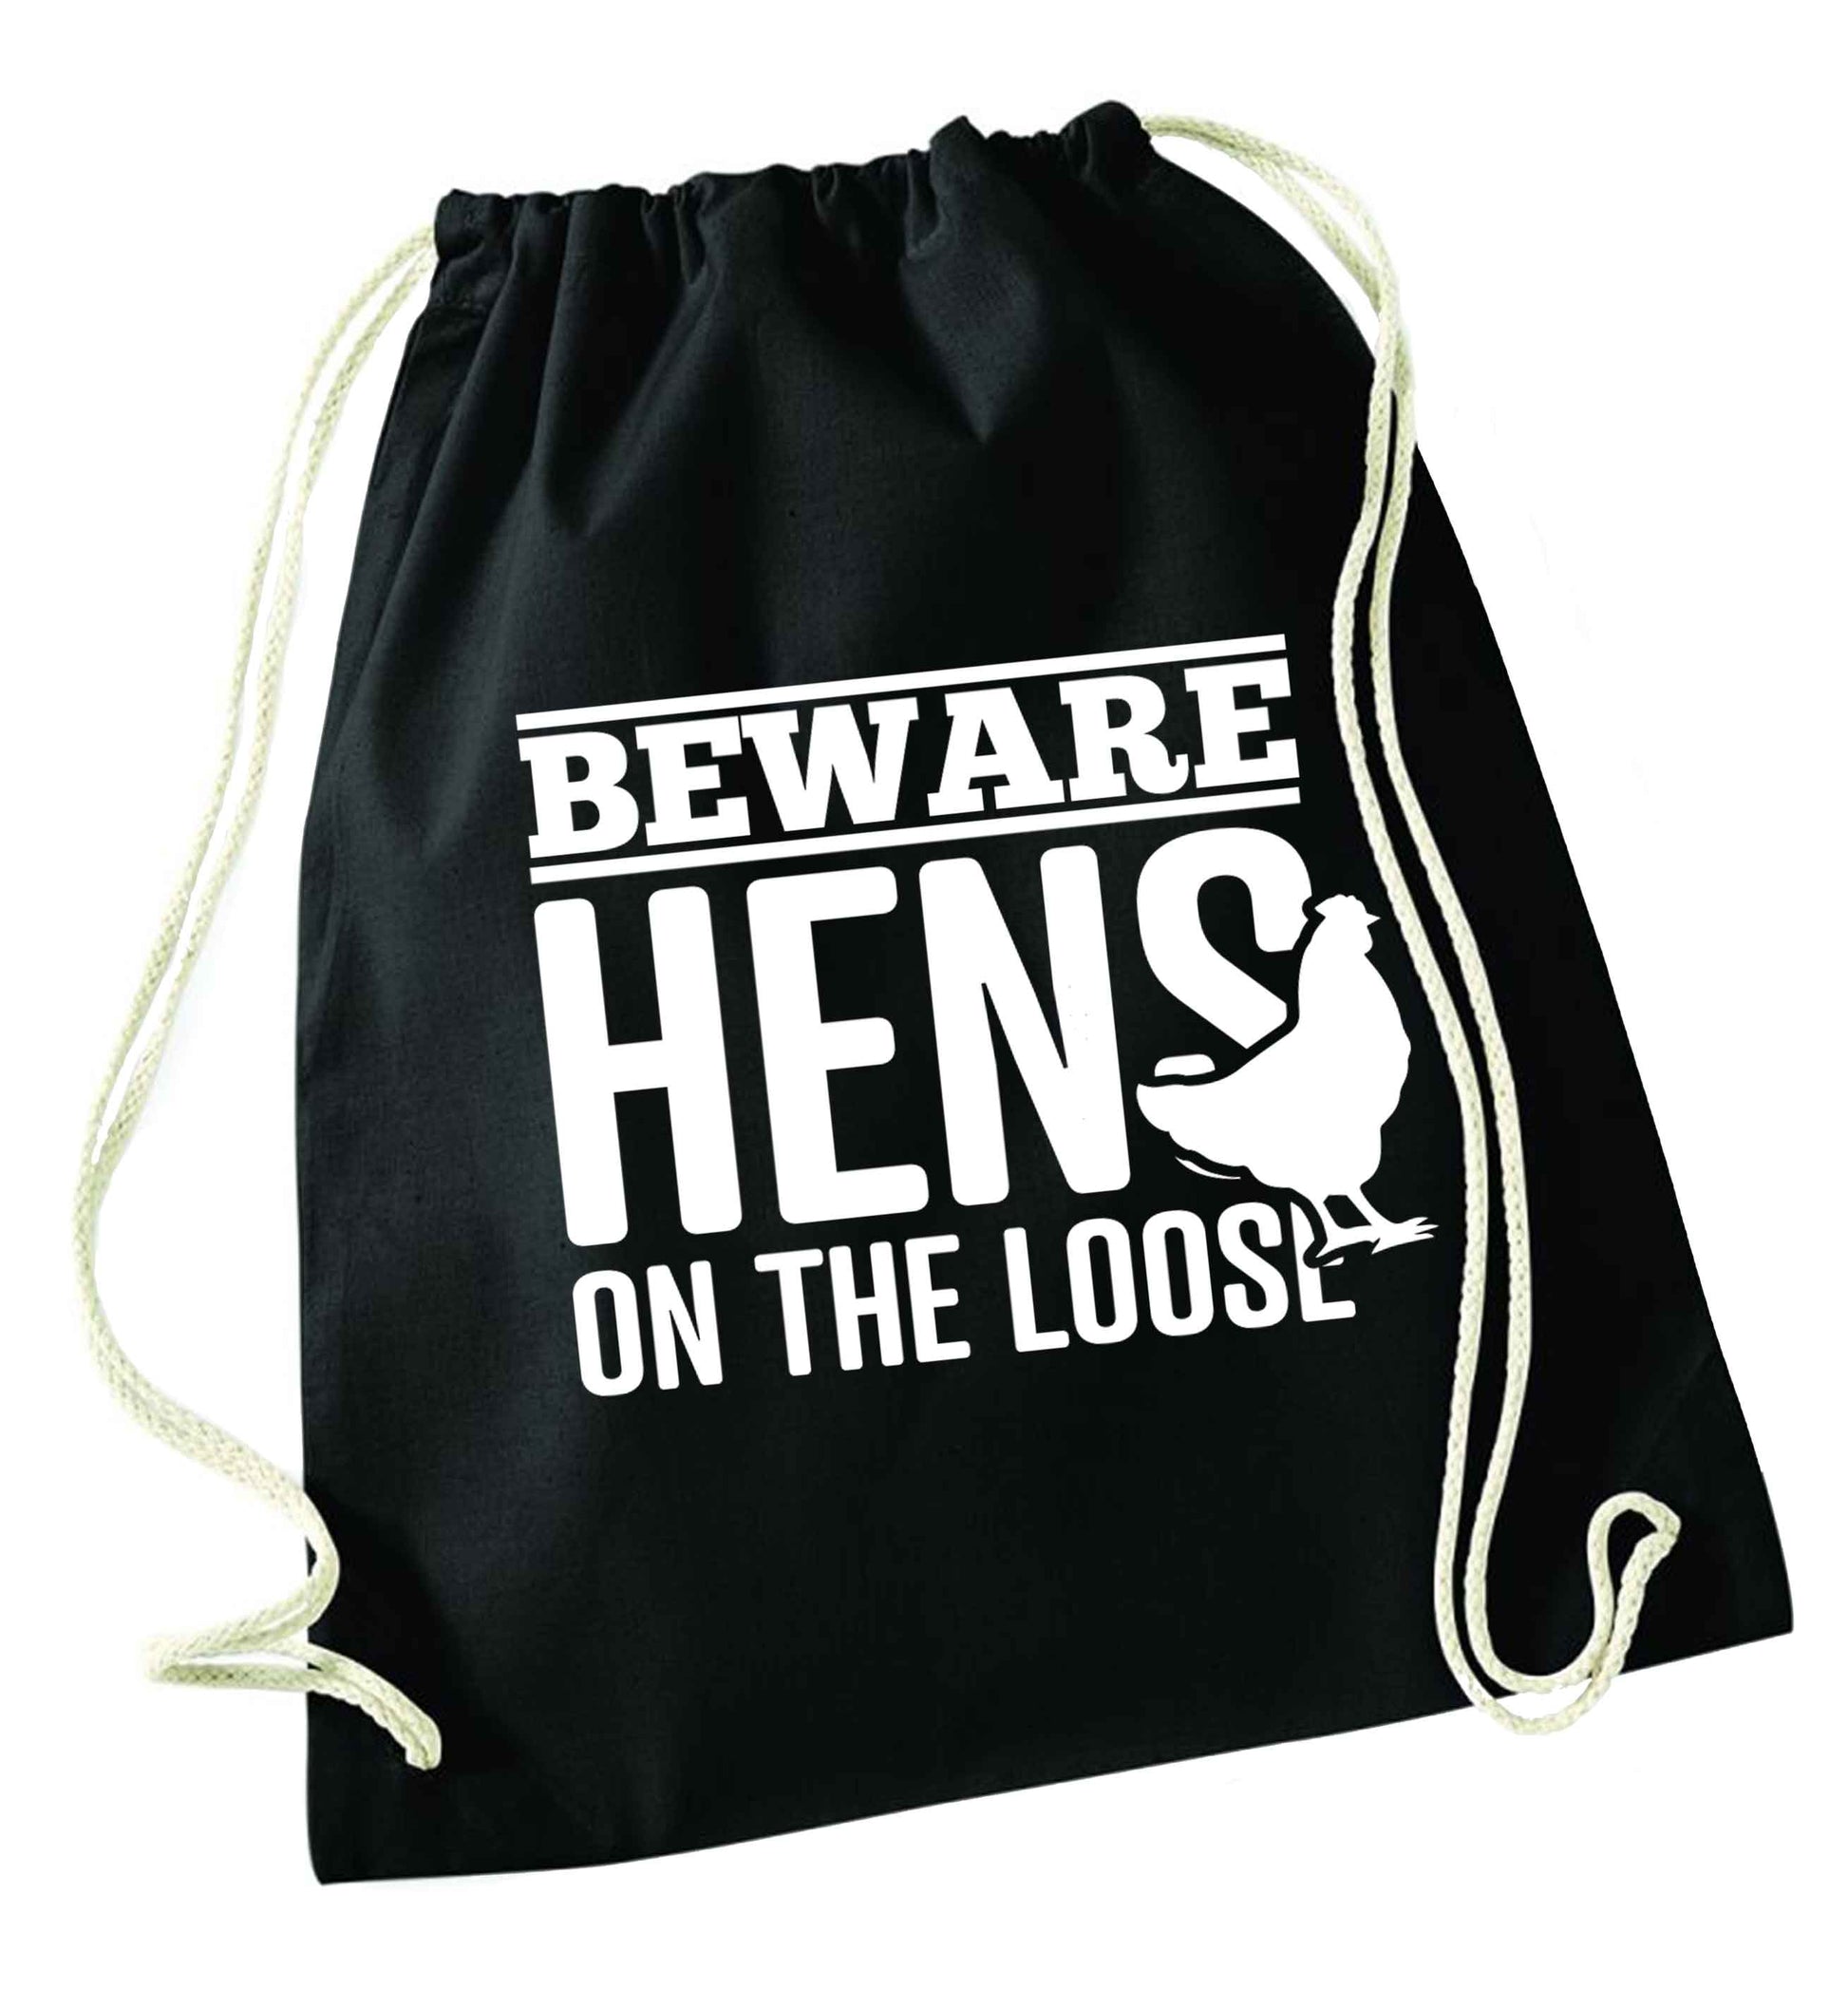 Beware hens on the loose black drawstring bag